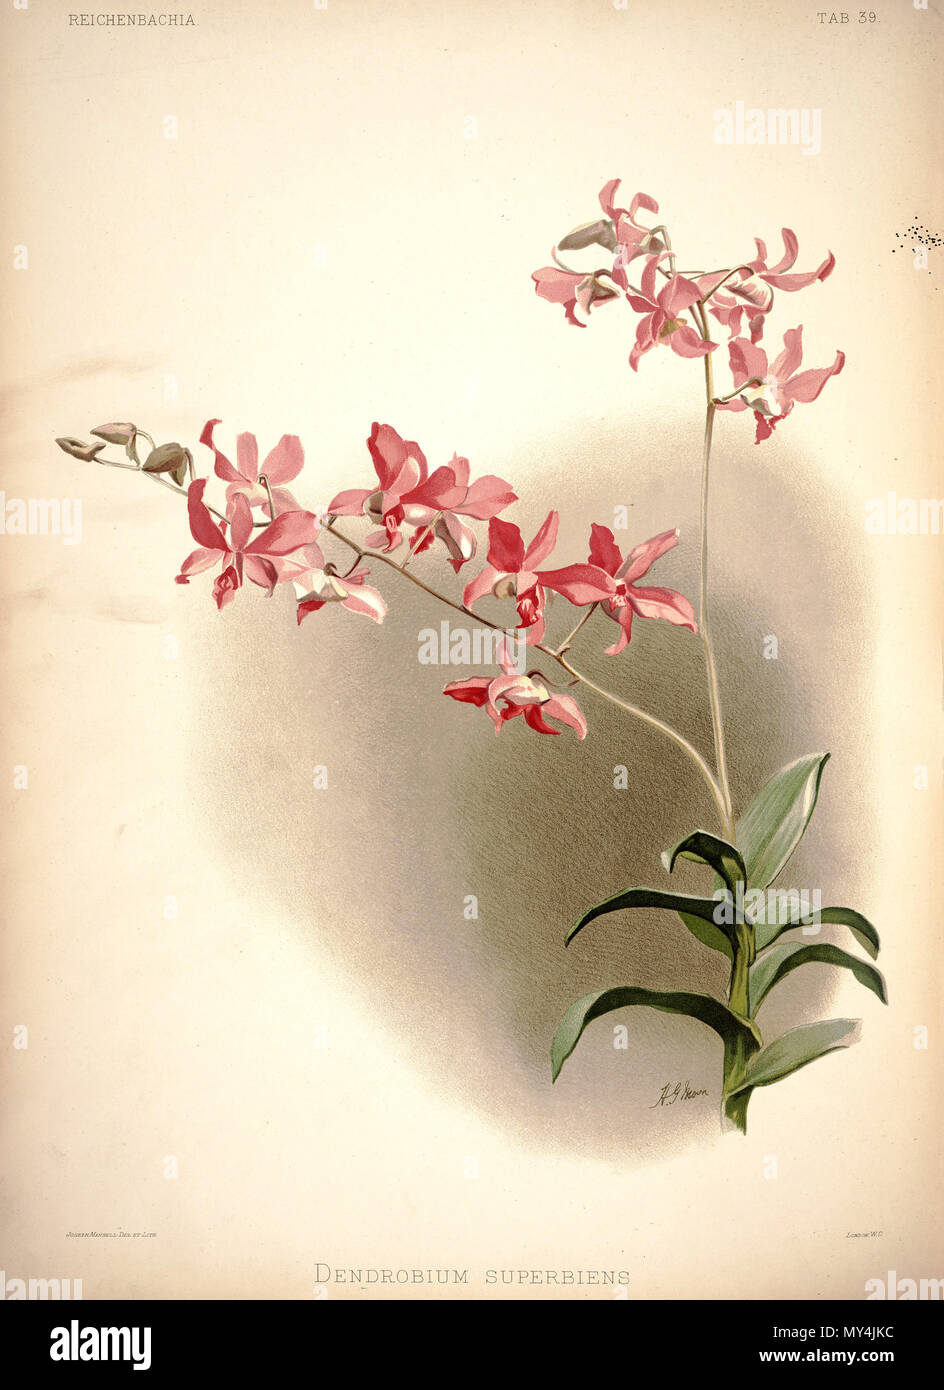 . Dendrobium × superbiens . between 1888 and 1894. H. Sotheran & Co., London (editor) 189 Frederick Sander - Reichenbachia I plate 39 (1888) - Dendrobium superbiens Stock Photo